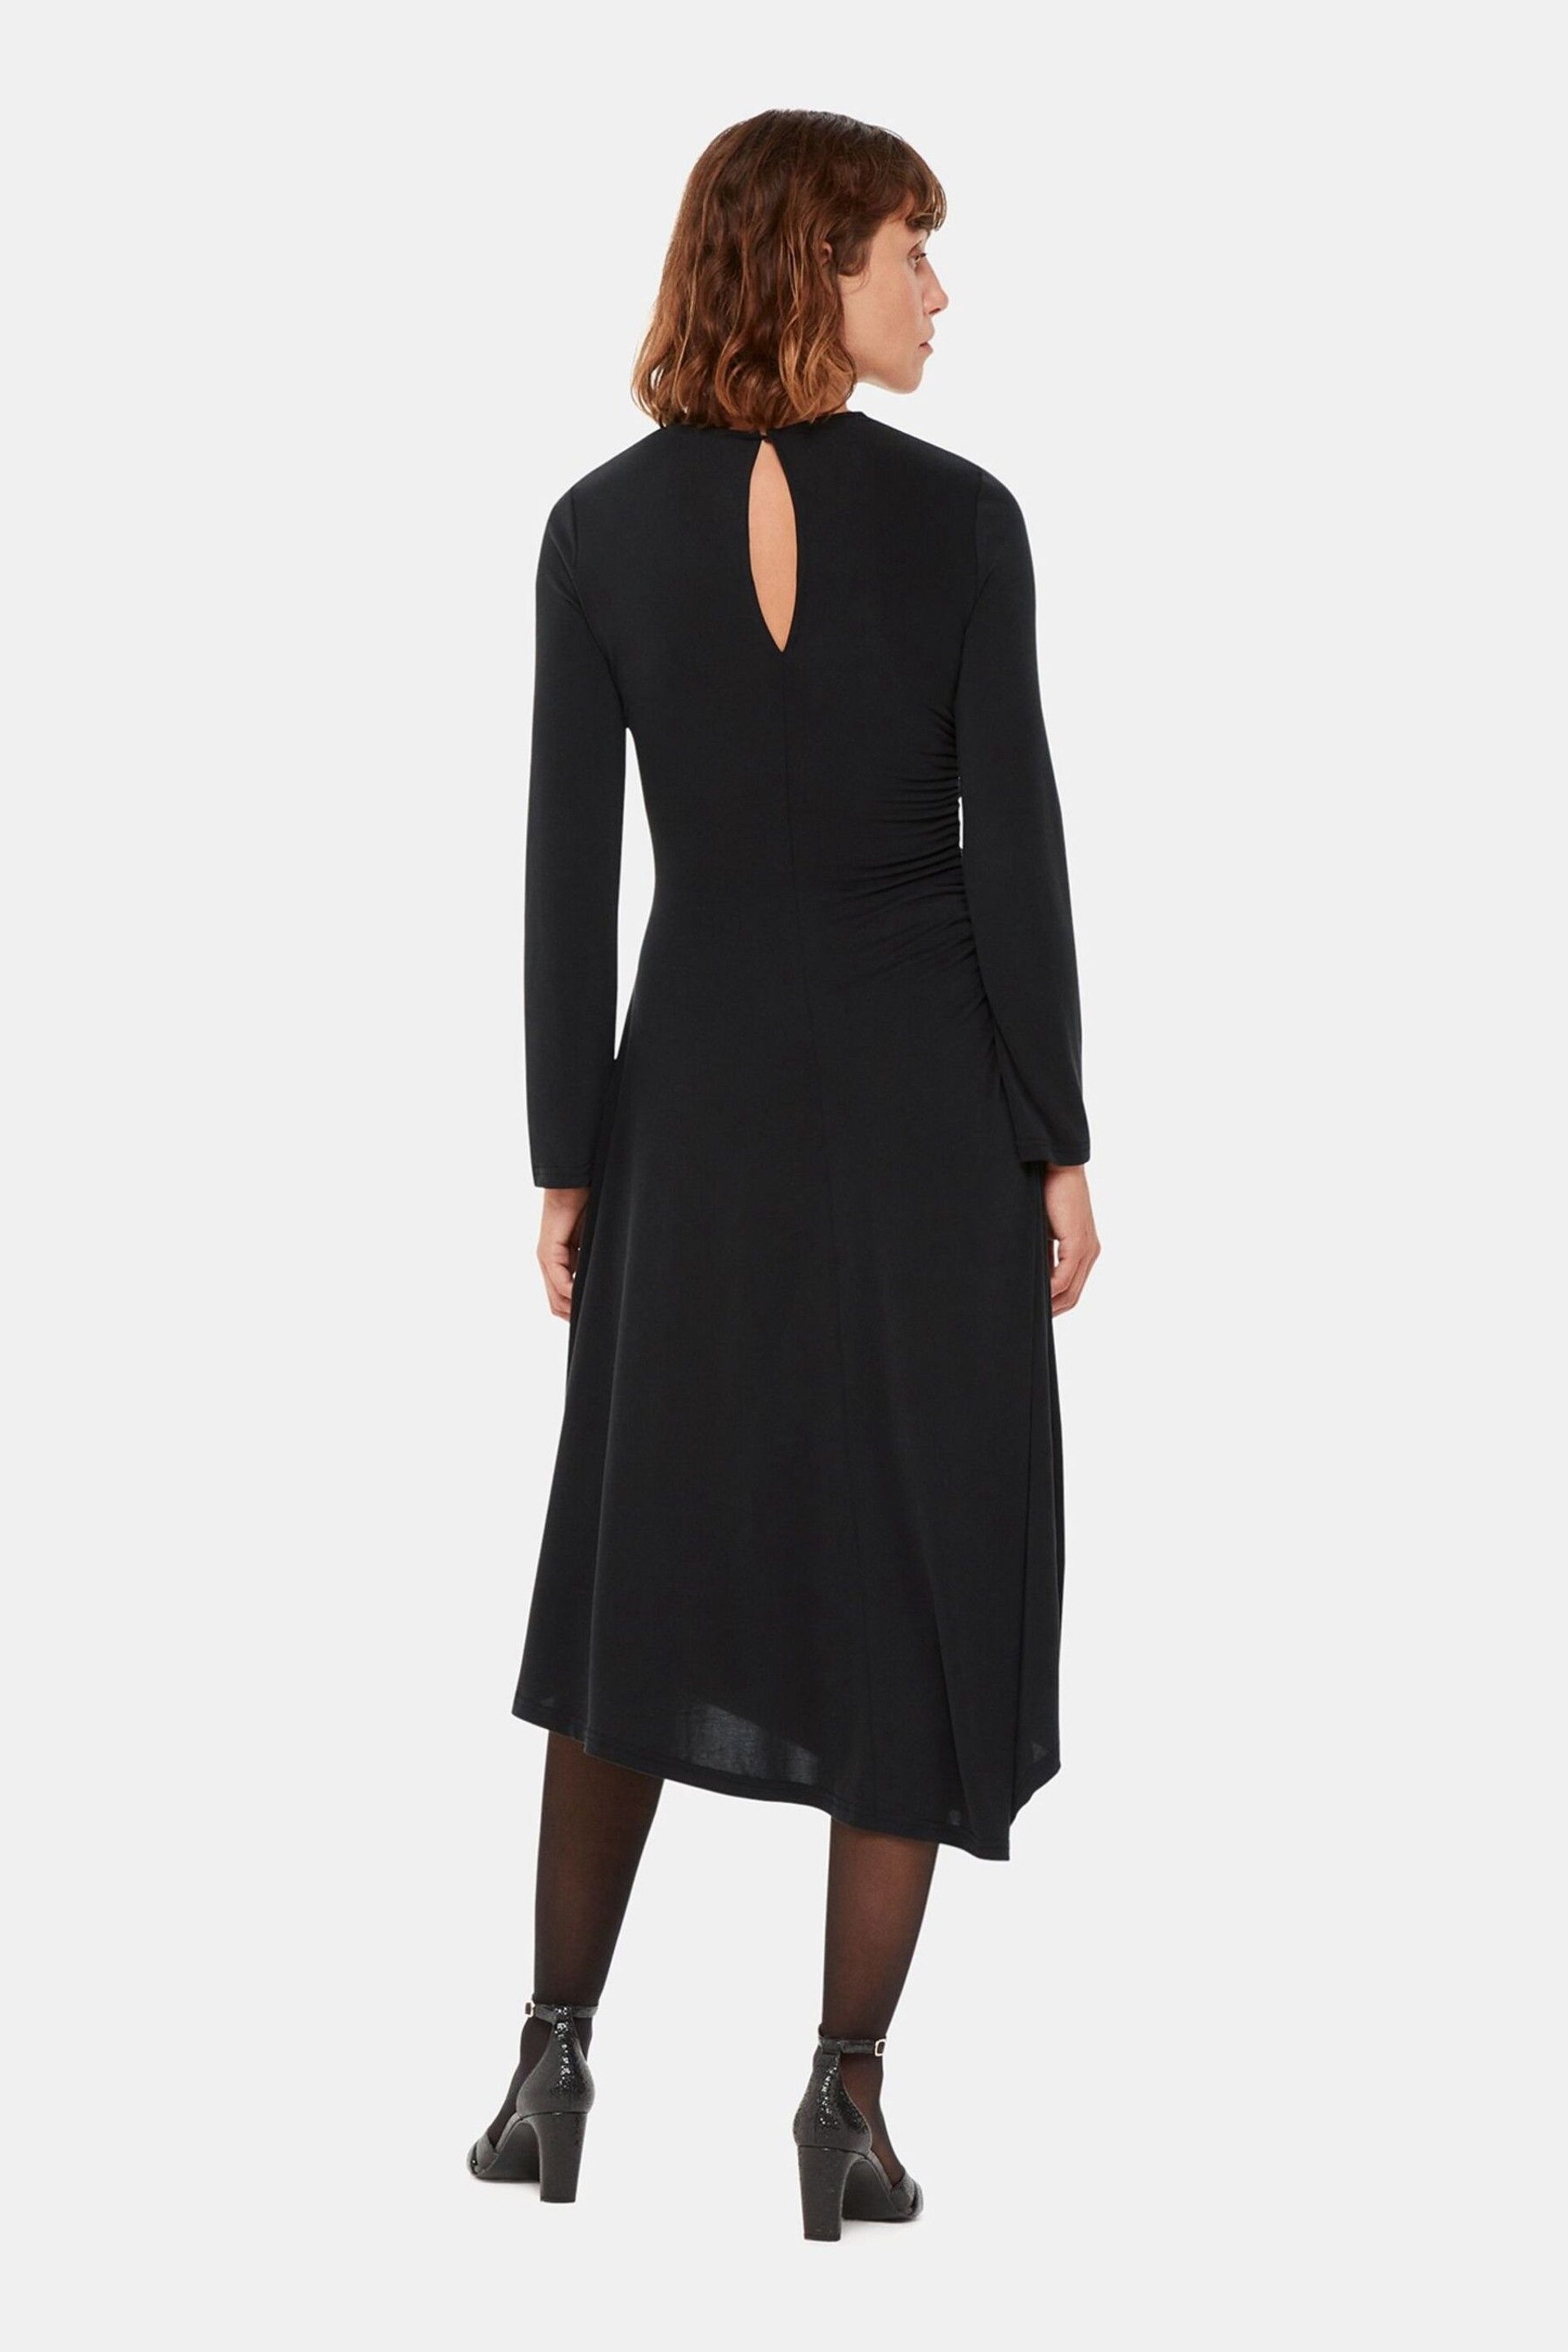 Whistles Asymmetric Jersey Midi Black Dress - Image 2 of 5